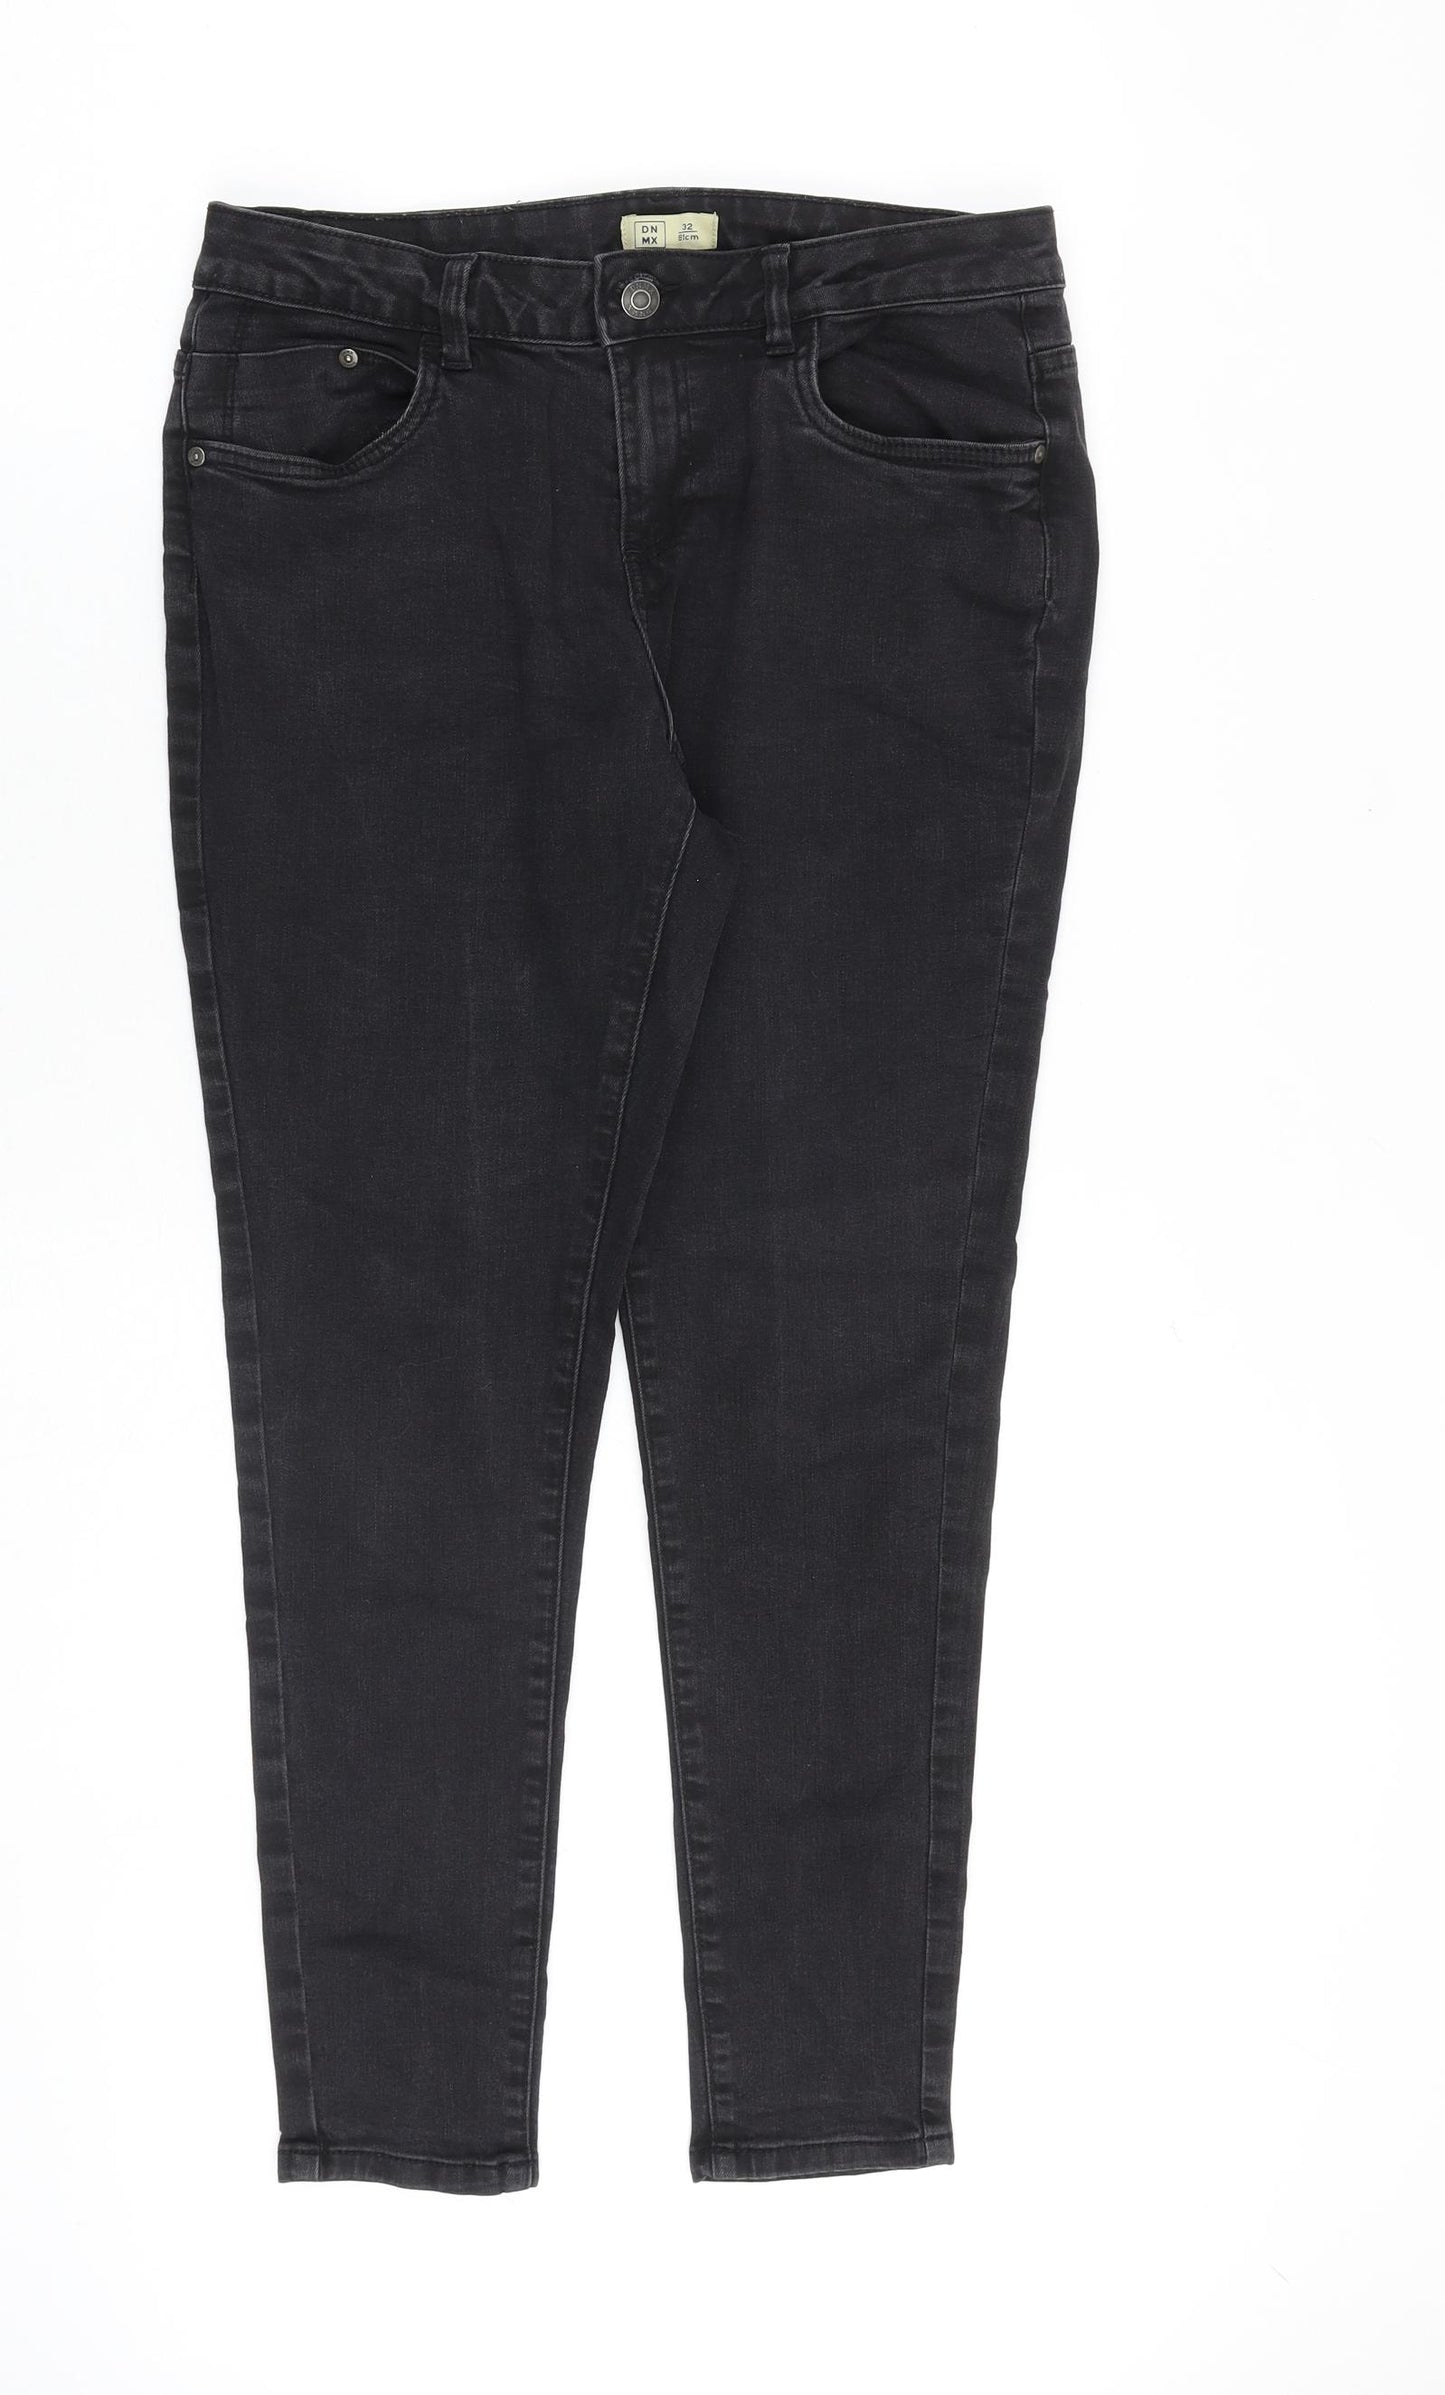 DNMX Womens Black Cotton Skinny Jeans Size 32 in L28 in Slim Zip